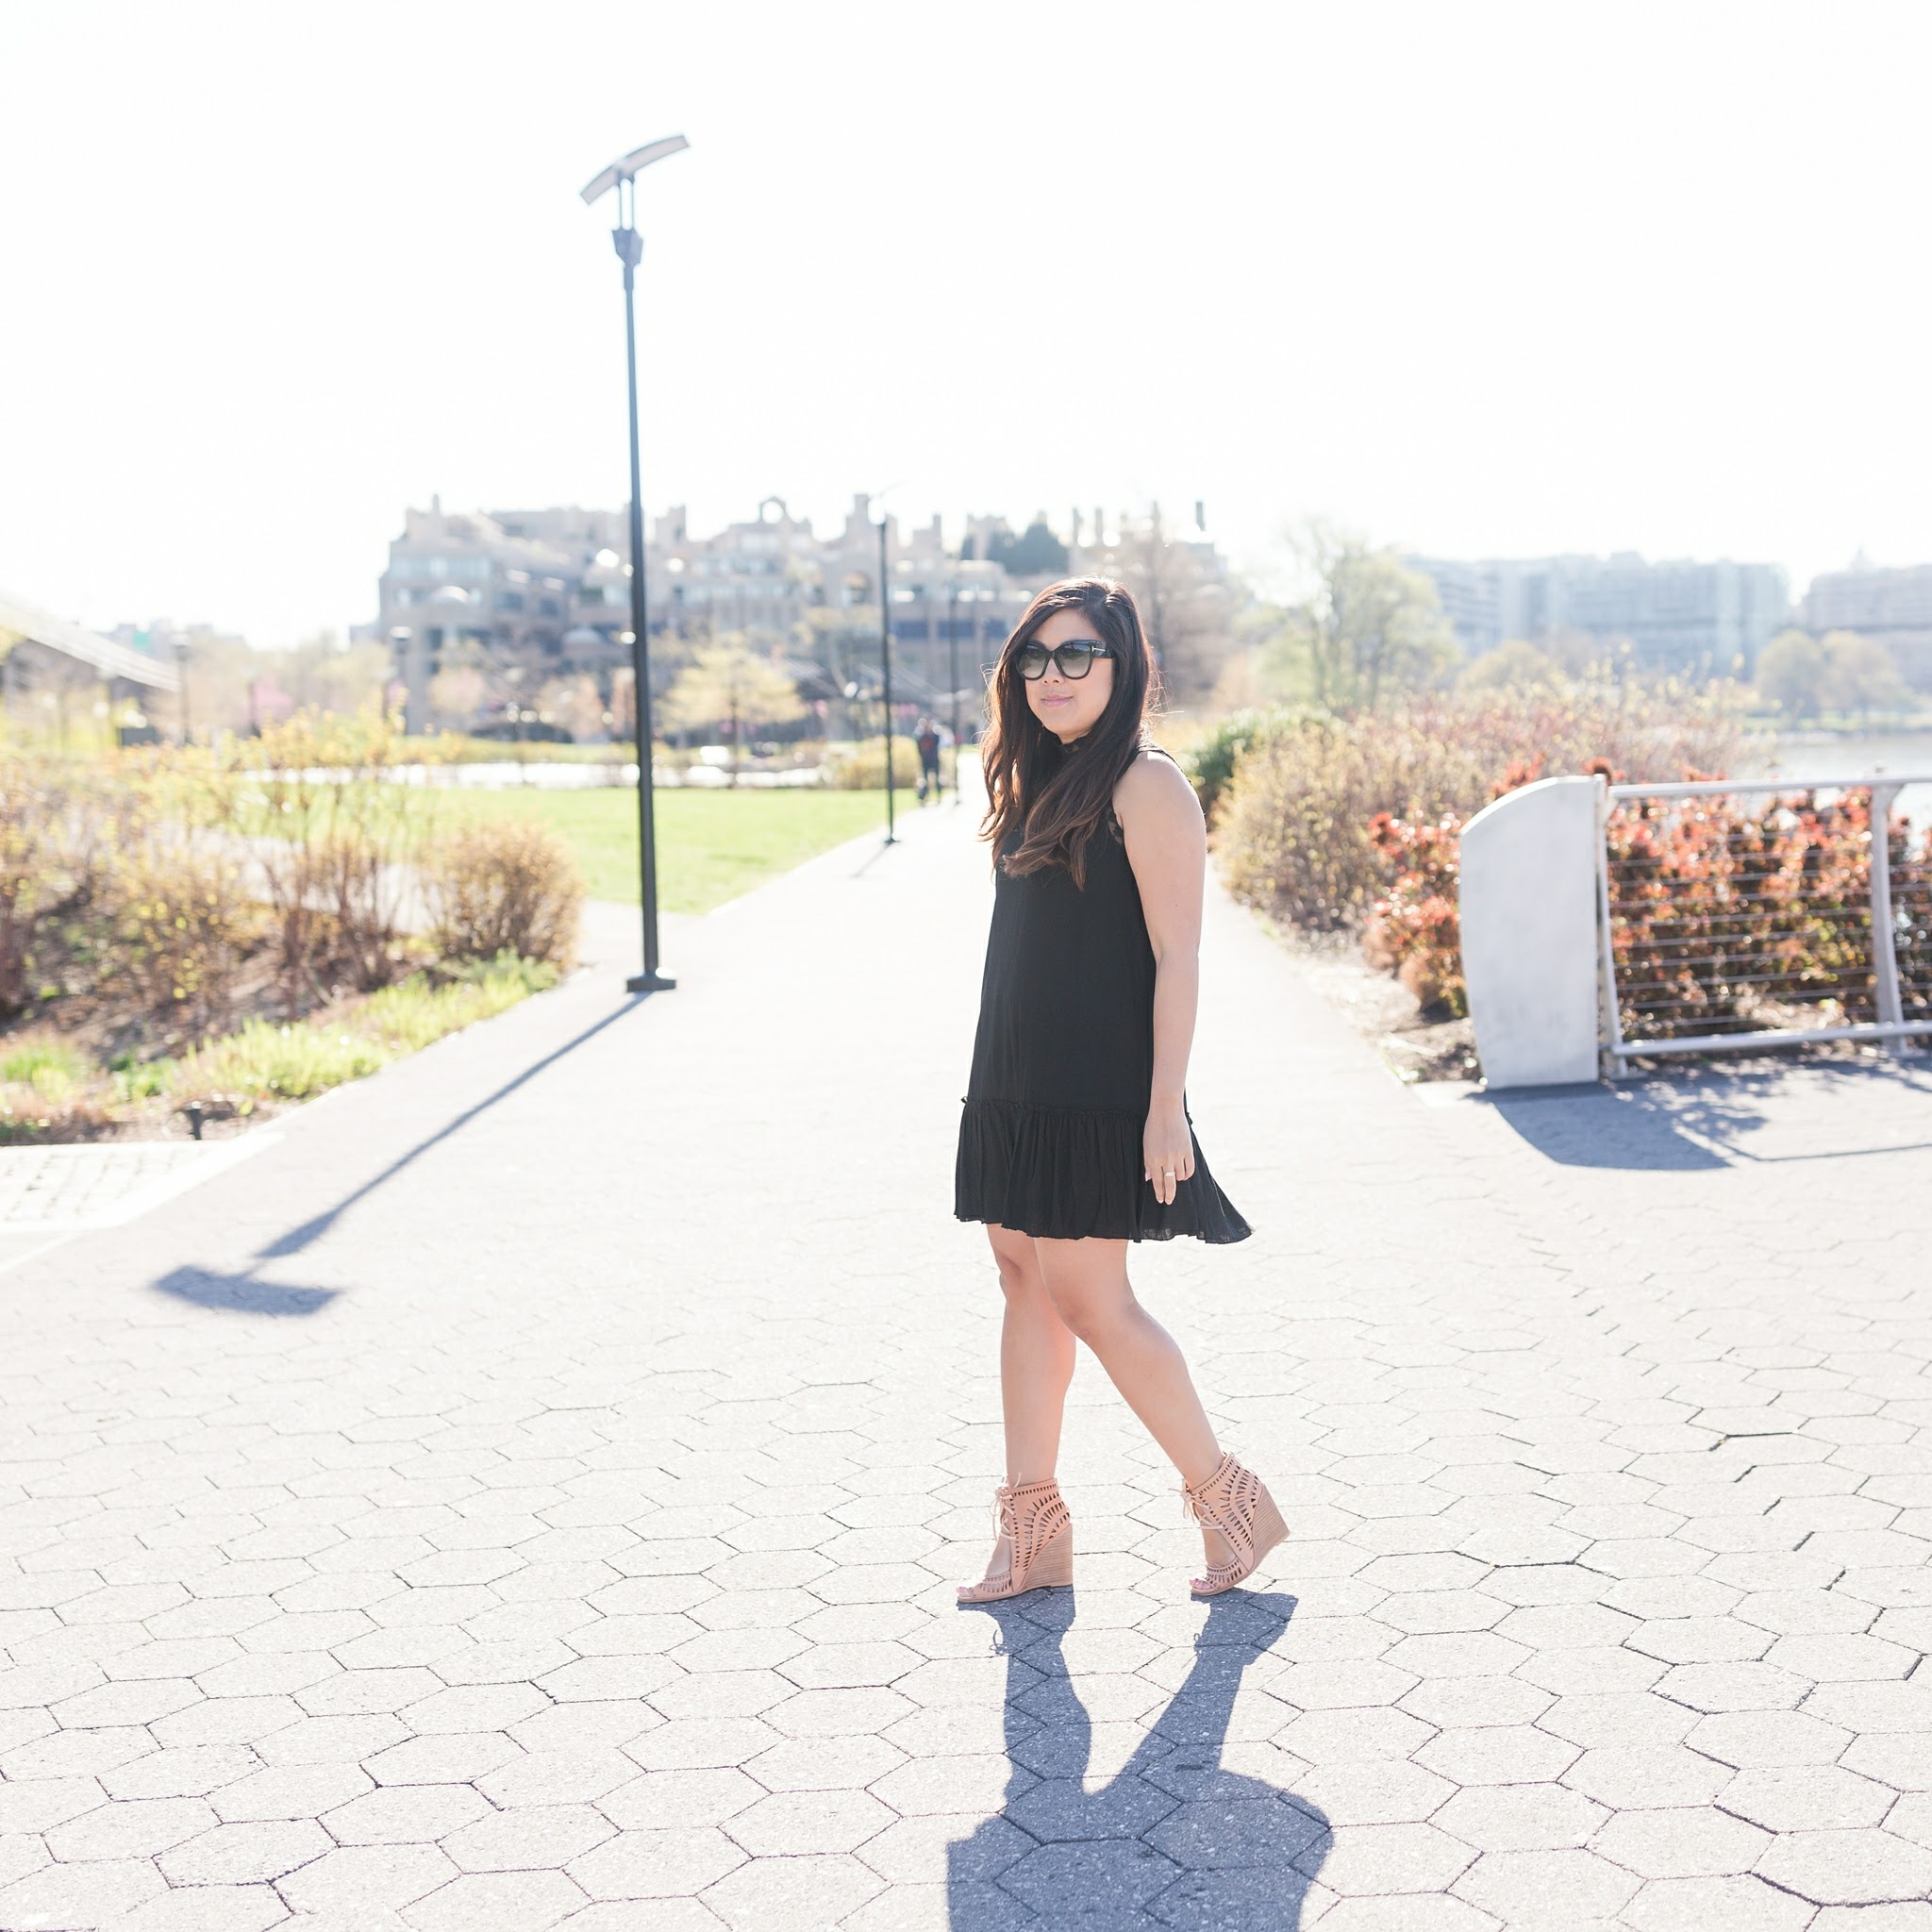 BB Dakota Black Dress and Cutout Wedges - Stylista Esquire - @stylistaesquire